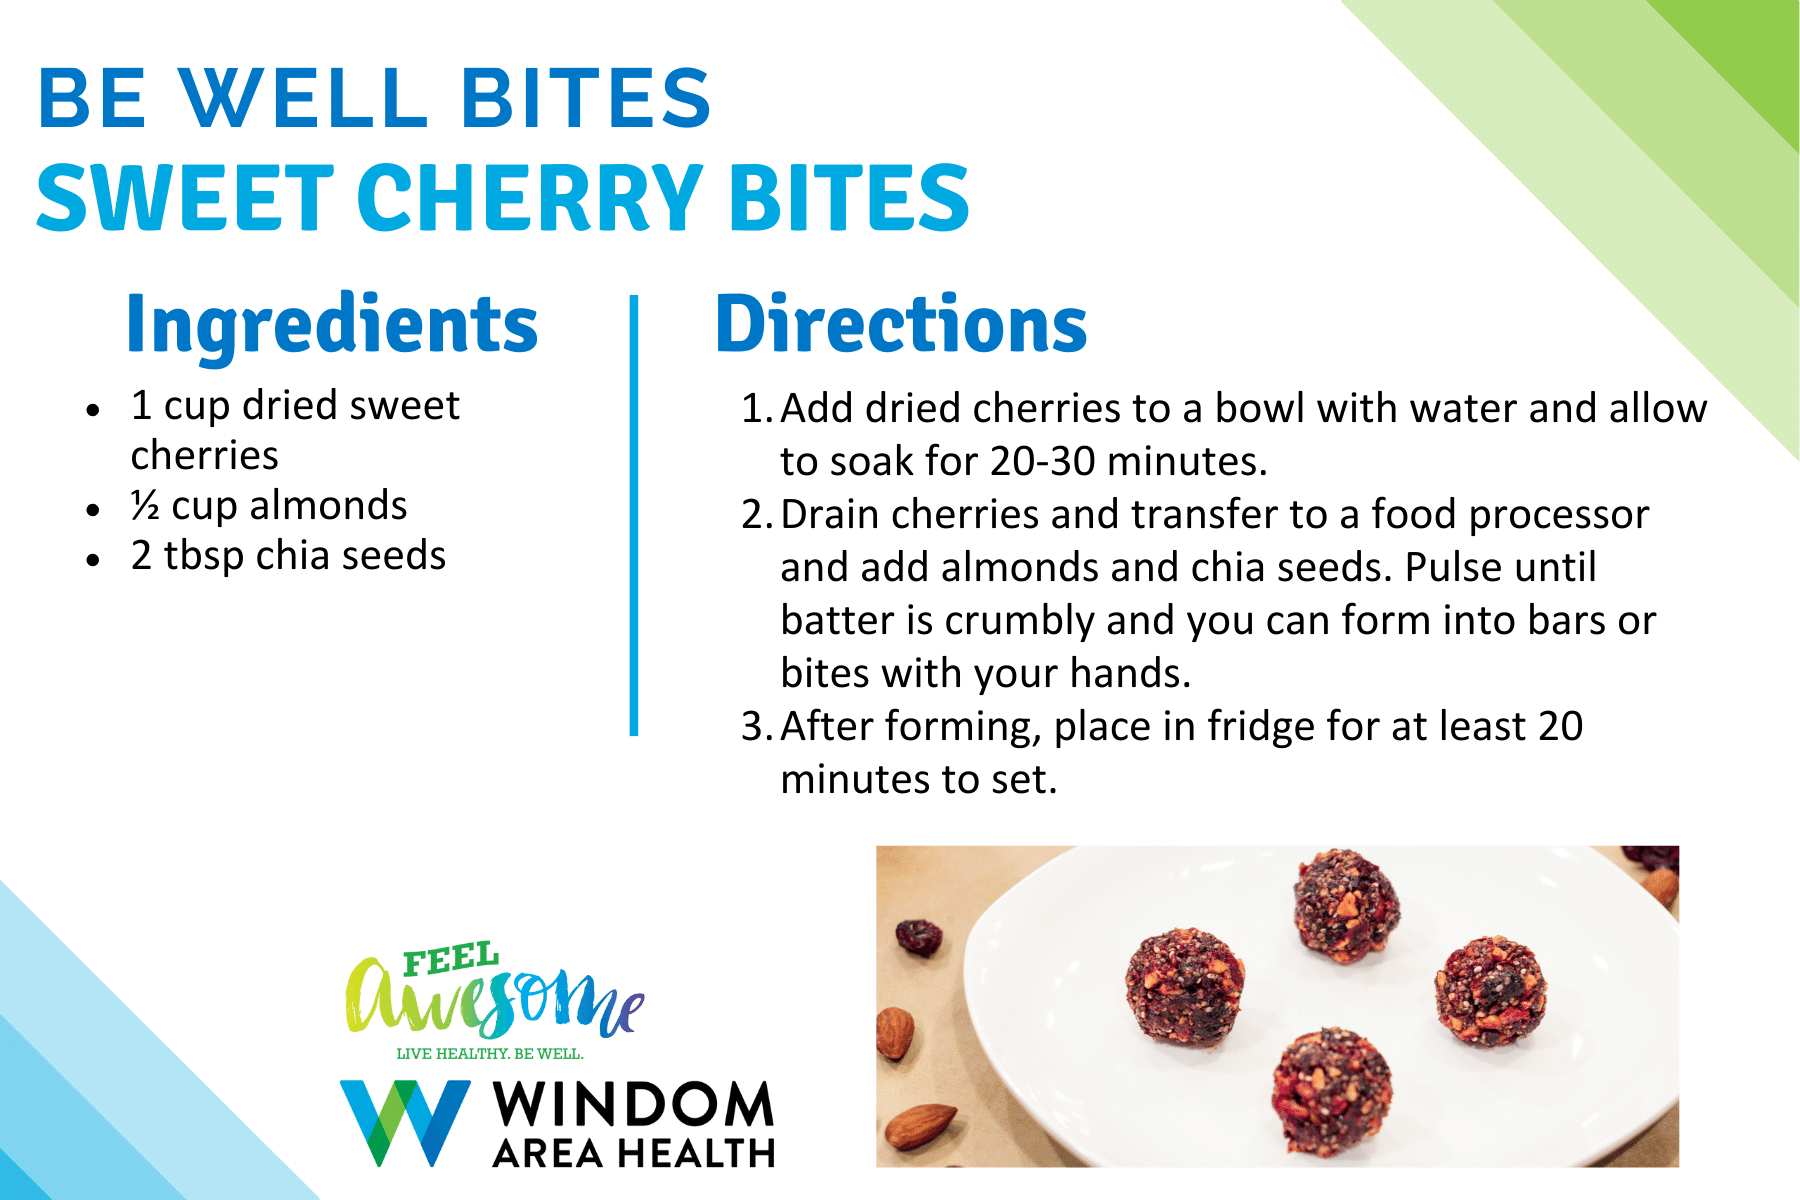 Be Well Bites Sweet Cherry Bites Recipe Card